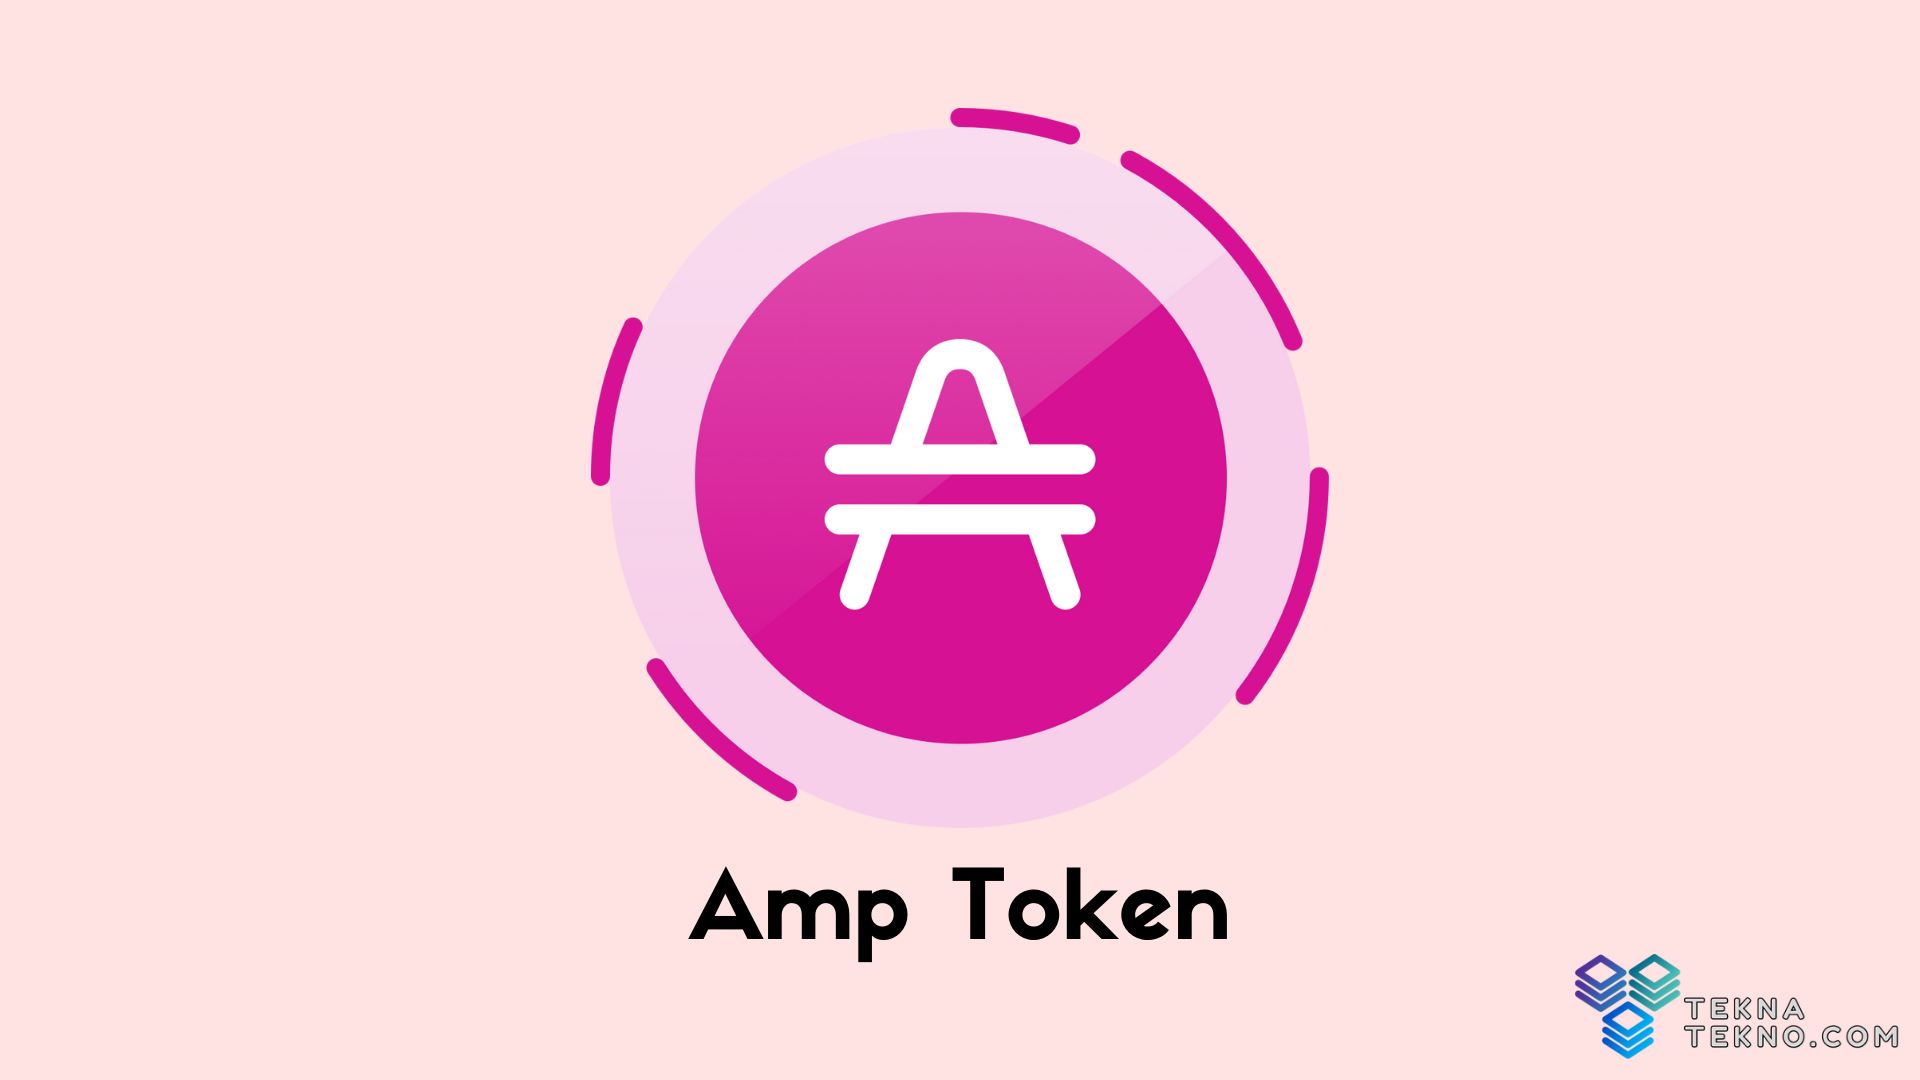 Crypto Amp Token Berbasis Ethereum Melonjak 23,59%